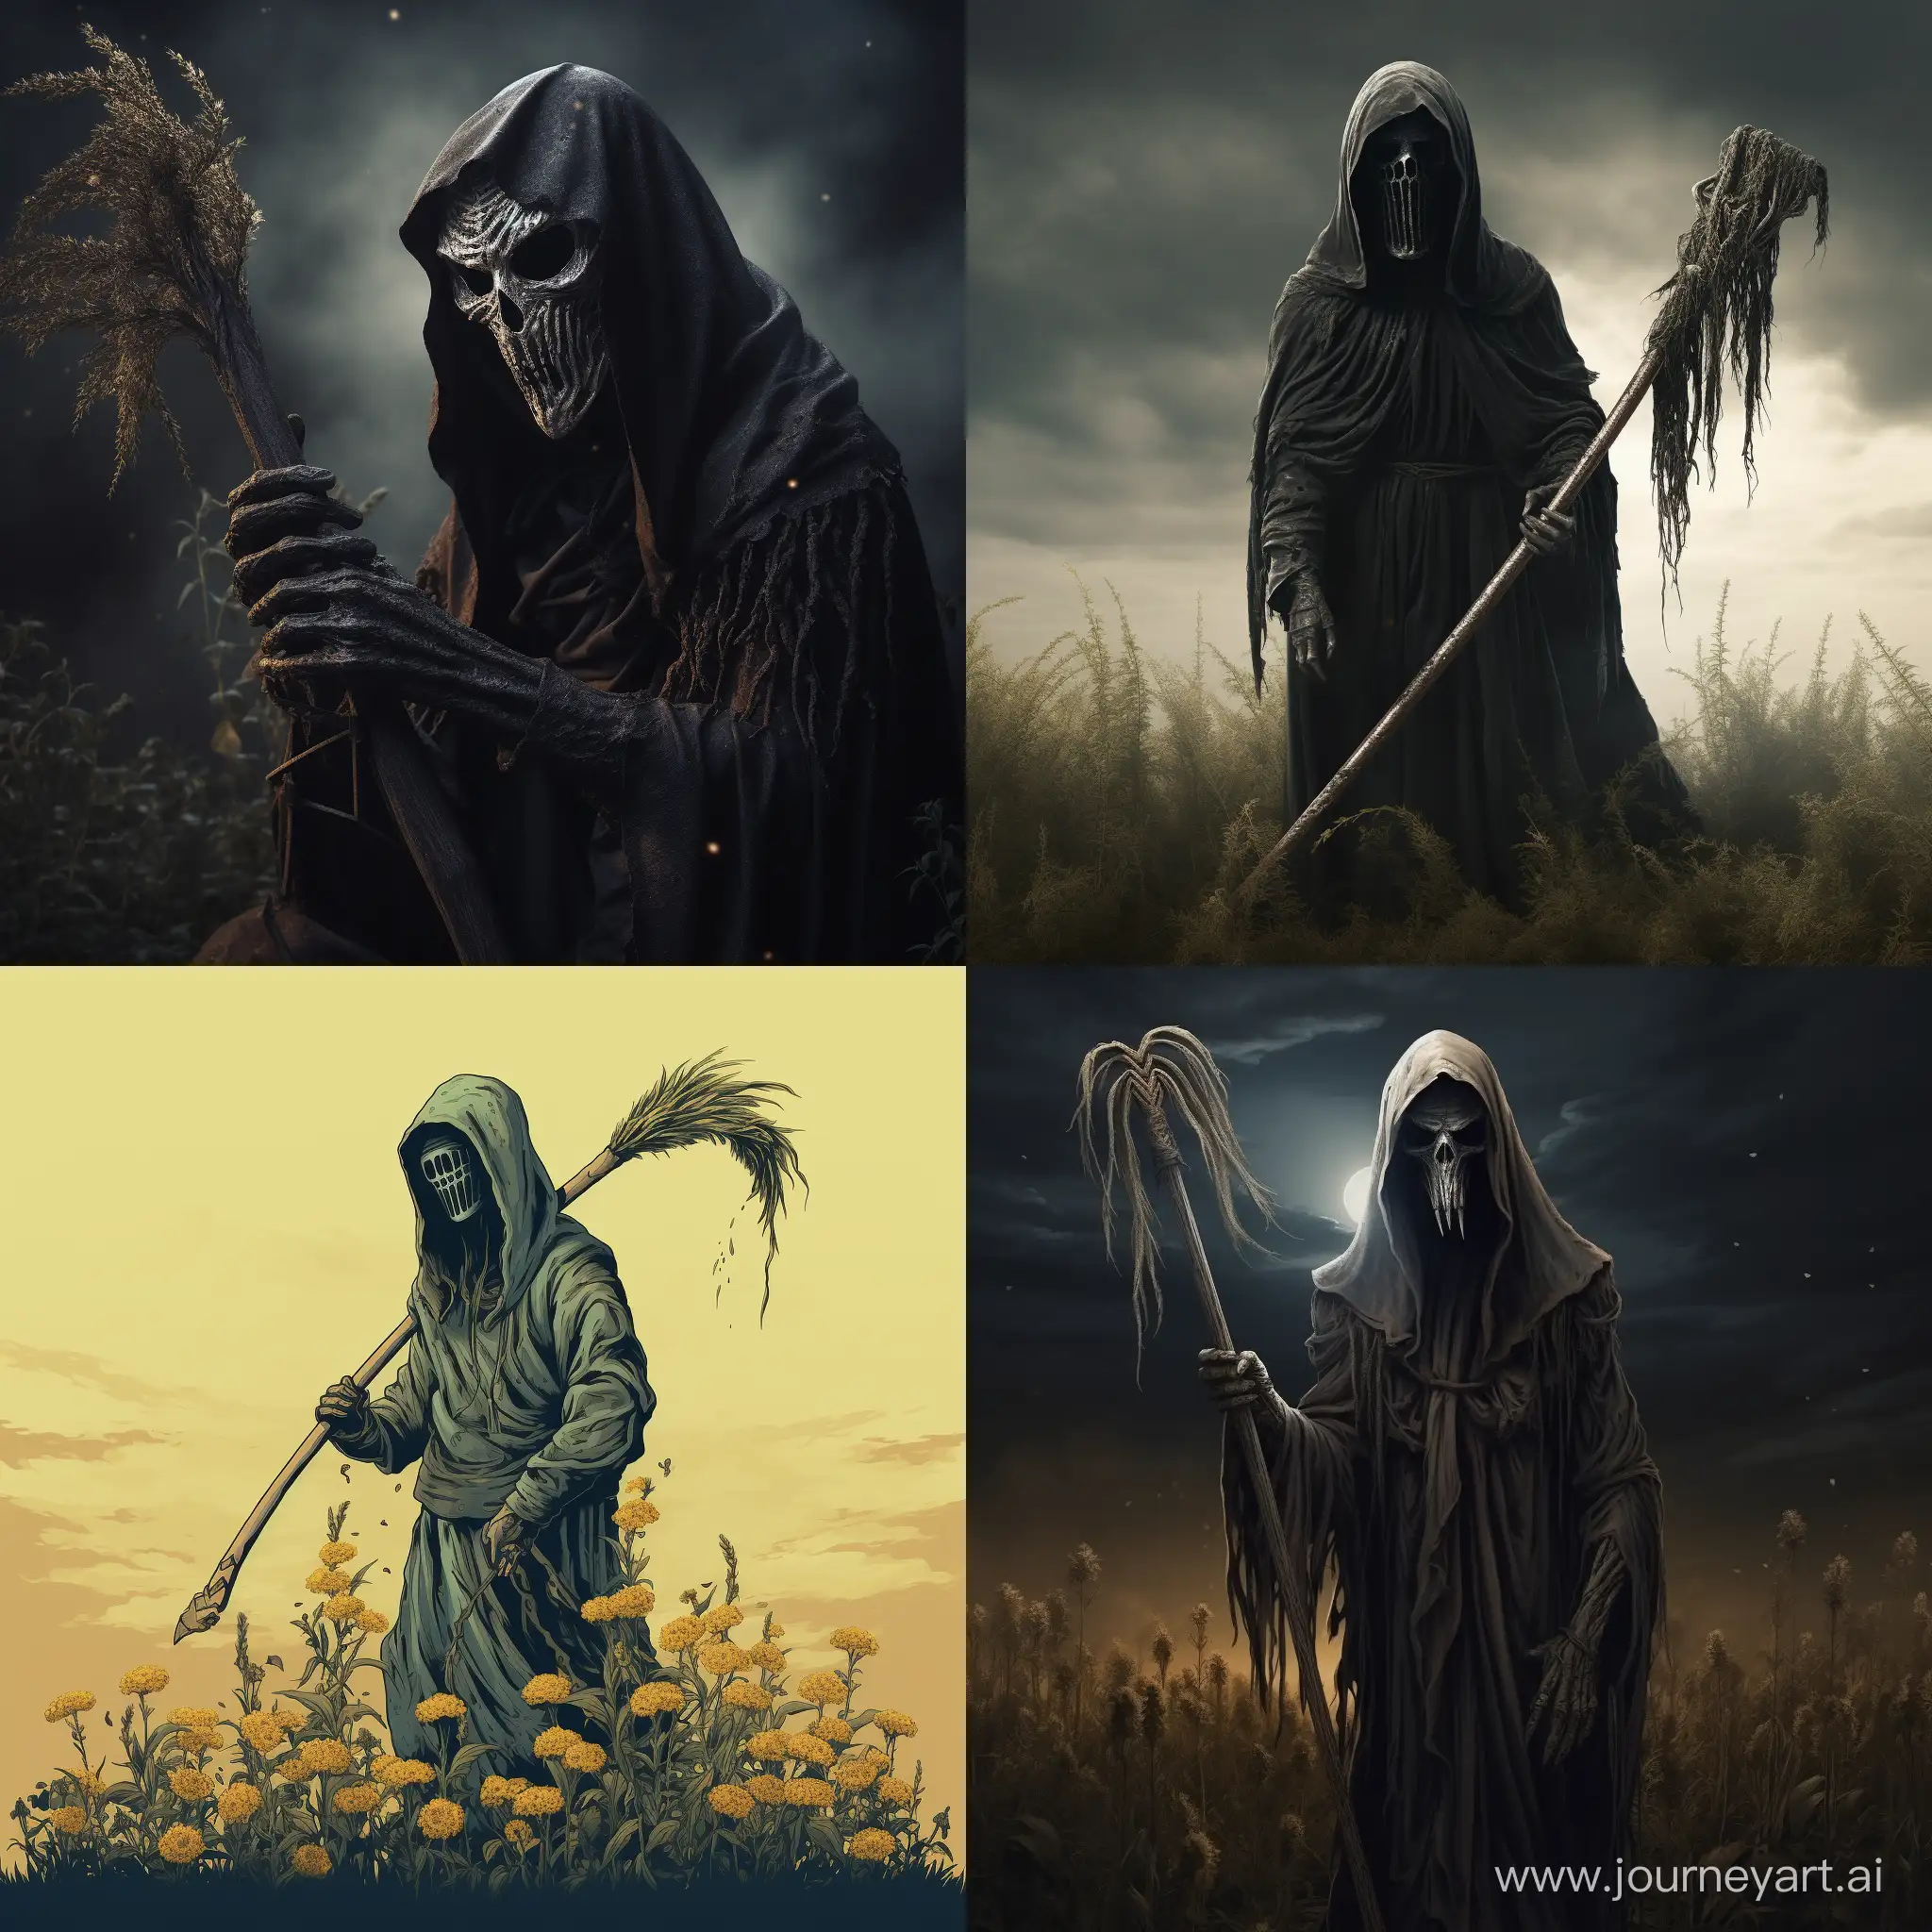 Grim reaper holding a weedwacker